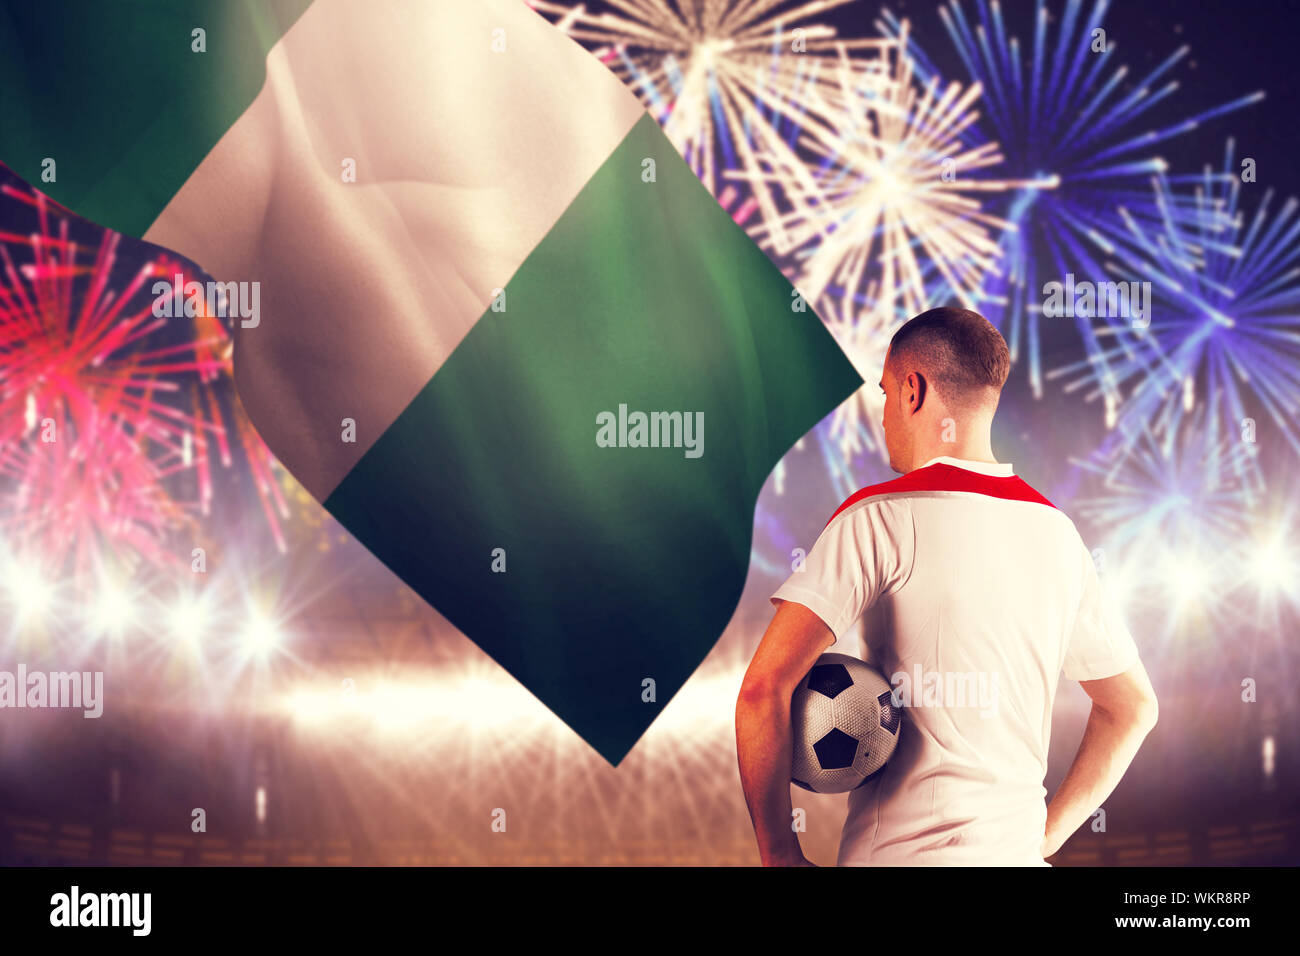 Football player holding the ball against fireworks exploding over football stadium Stock Photo